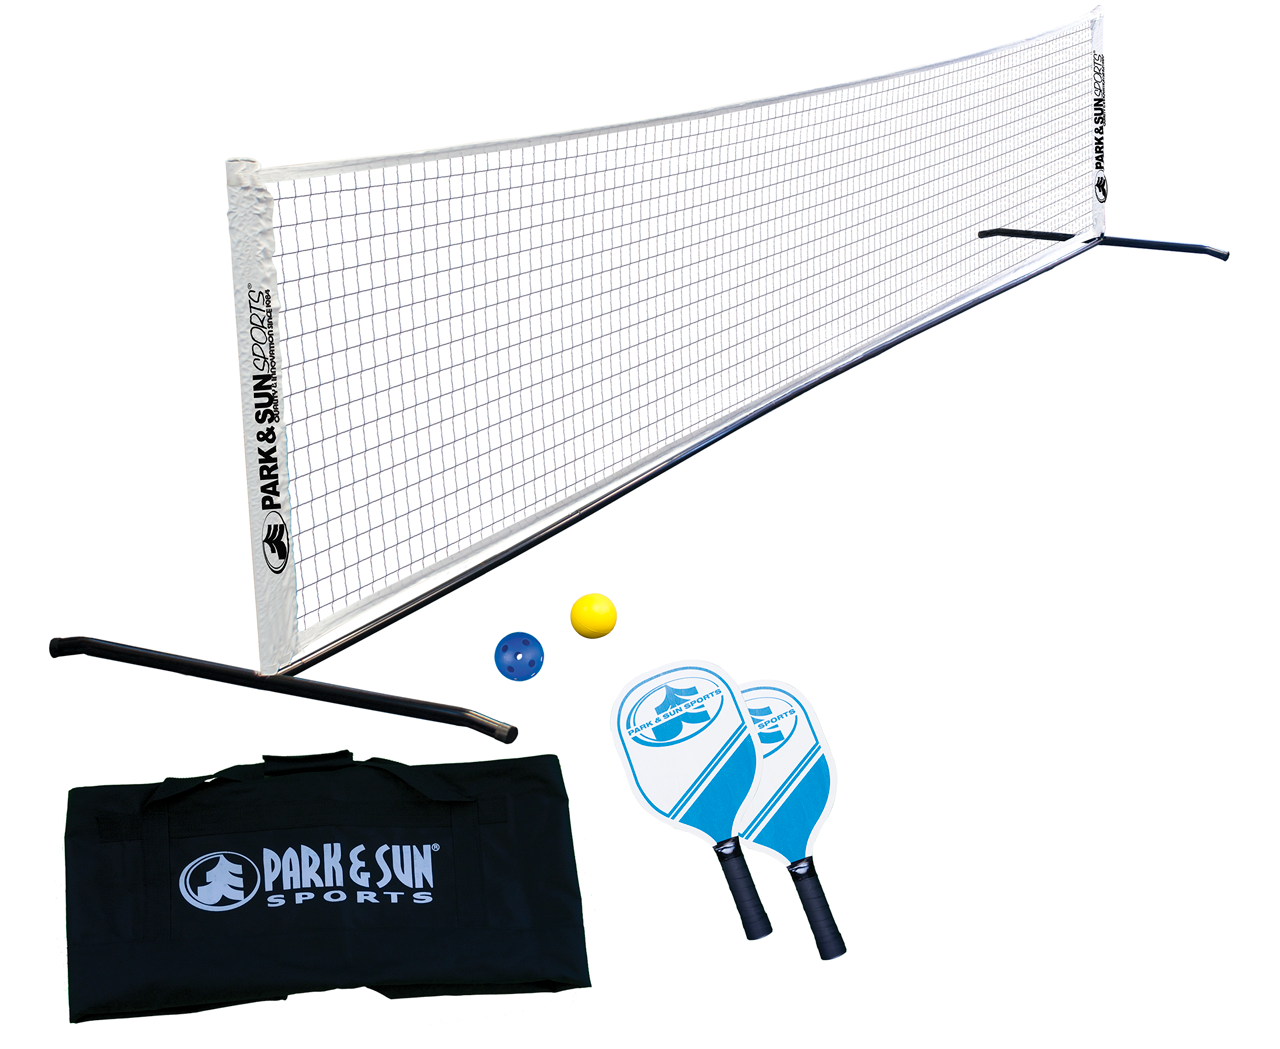 Details about   Celemoon Portable Foldable Tennis Net Set For Tennis Pickleball Kids Soccer V 